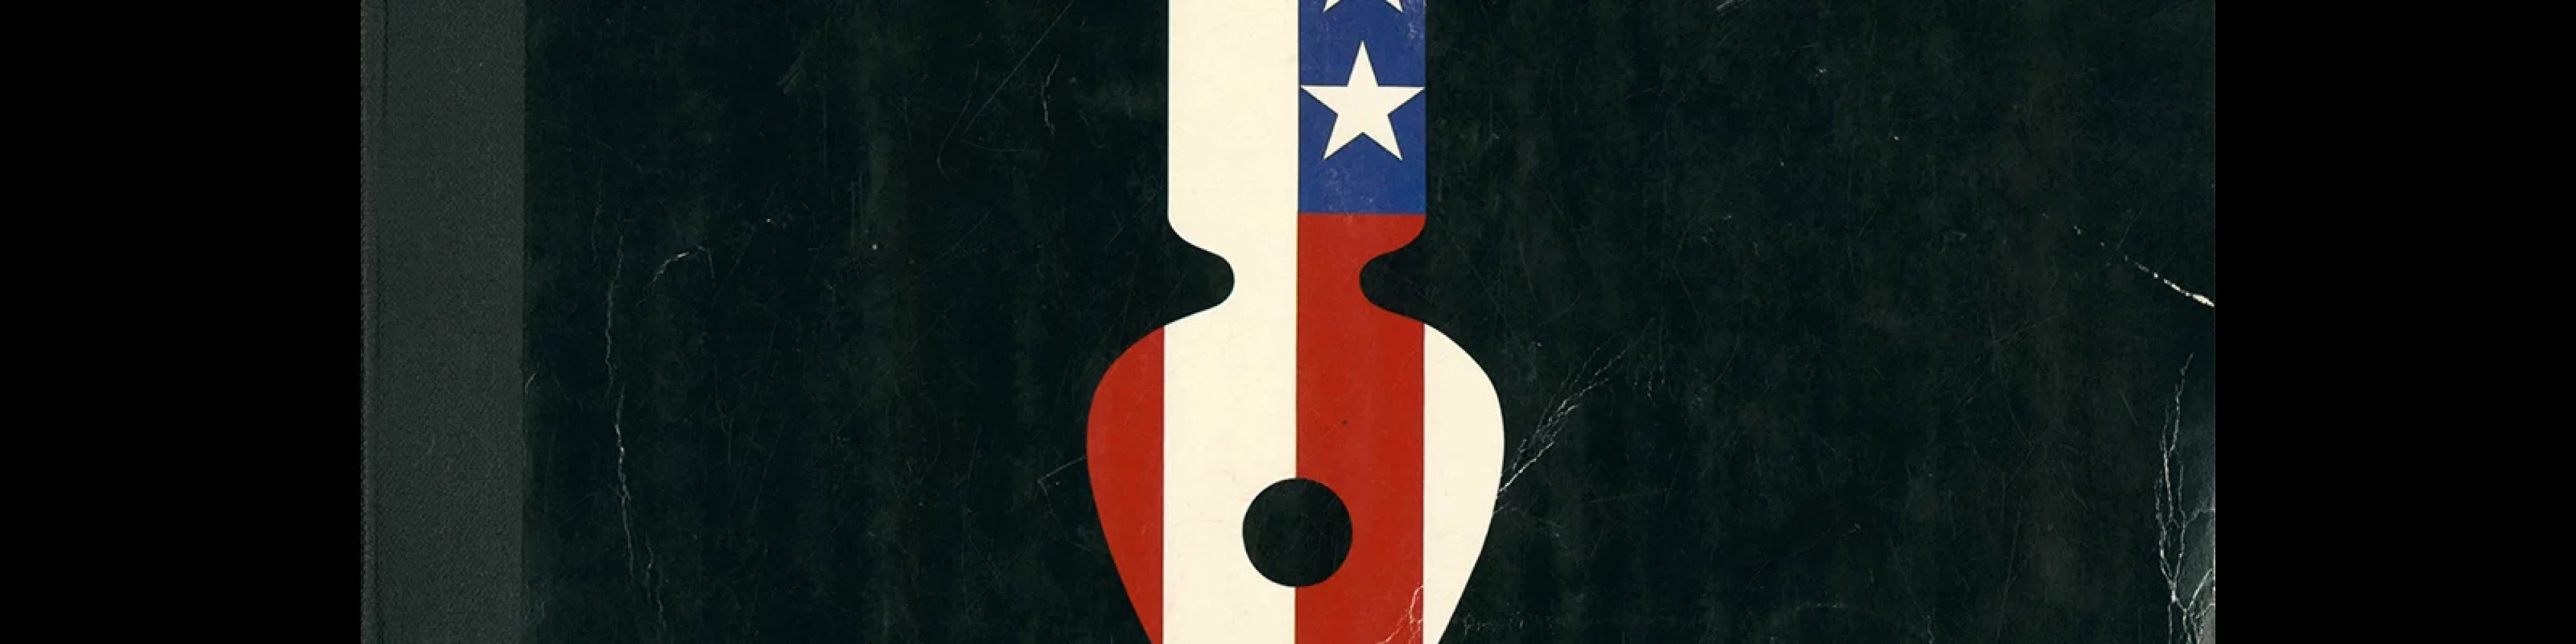 The Modern American Poster, Museum Of Modern Art, 1983